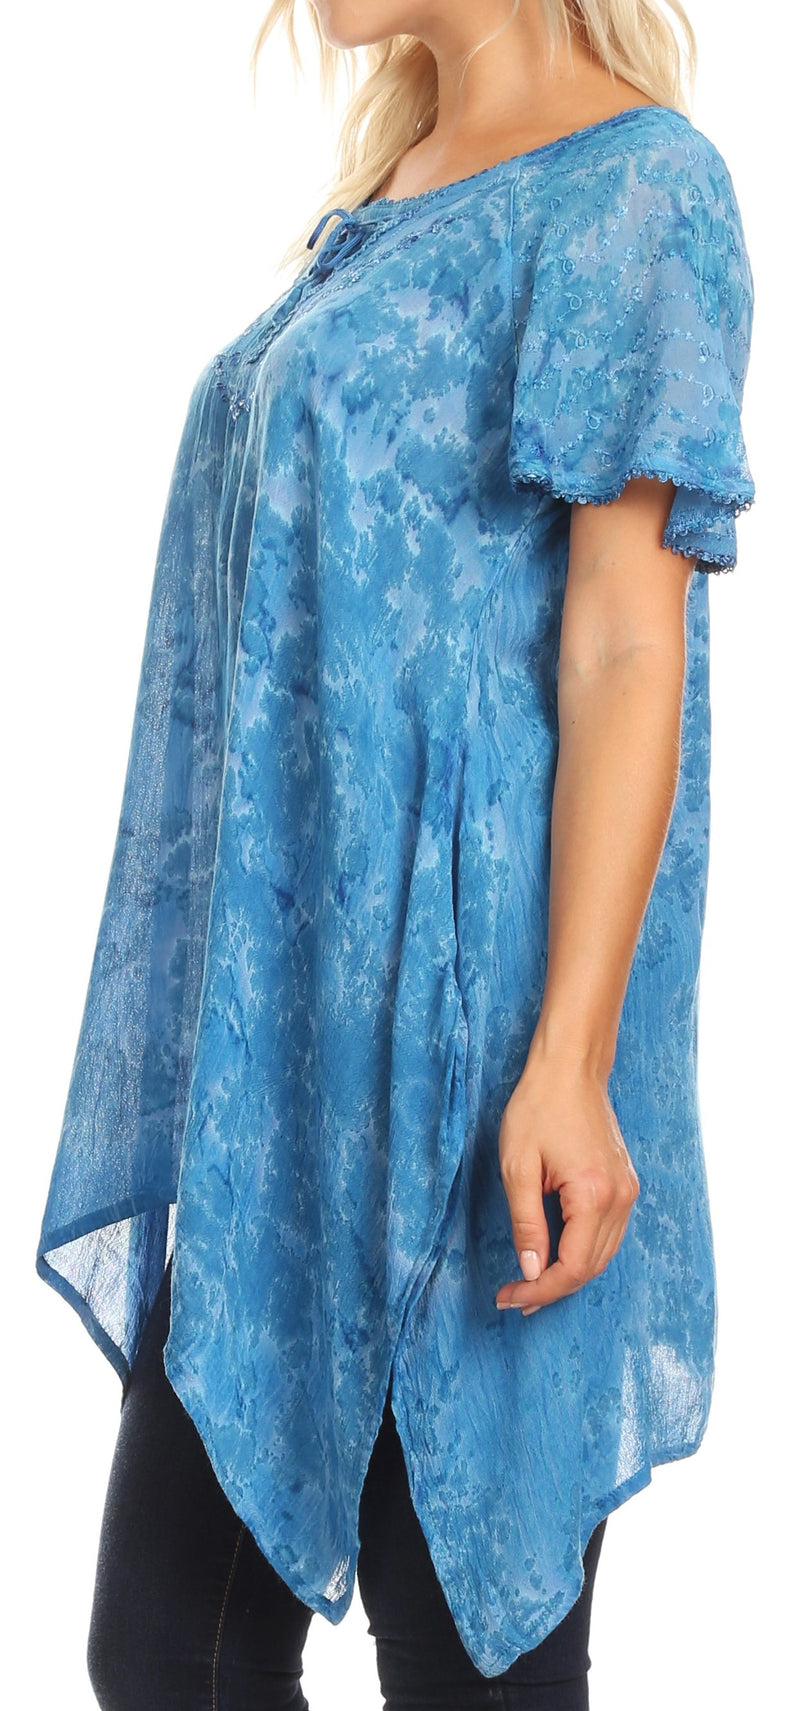 Sakkas Kiara Womens Asymmetrical Marble Dye Summer Top Blouse Short Sleeve Lace